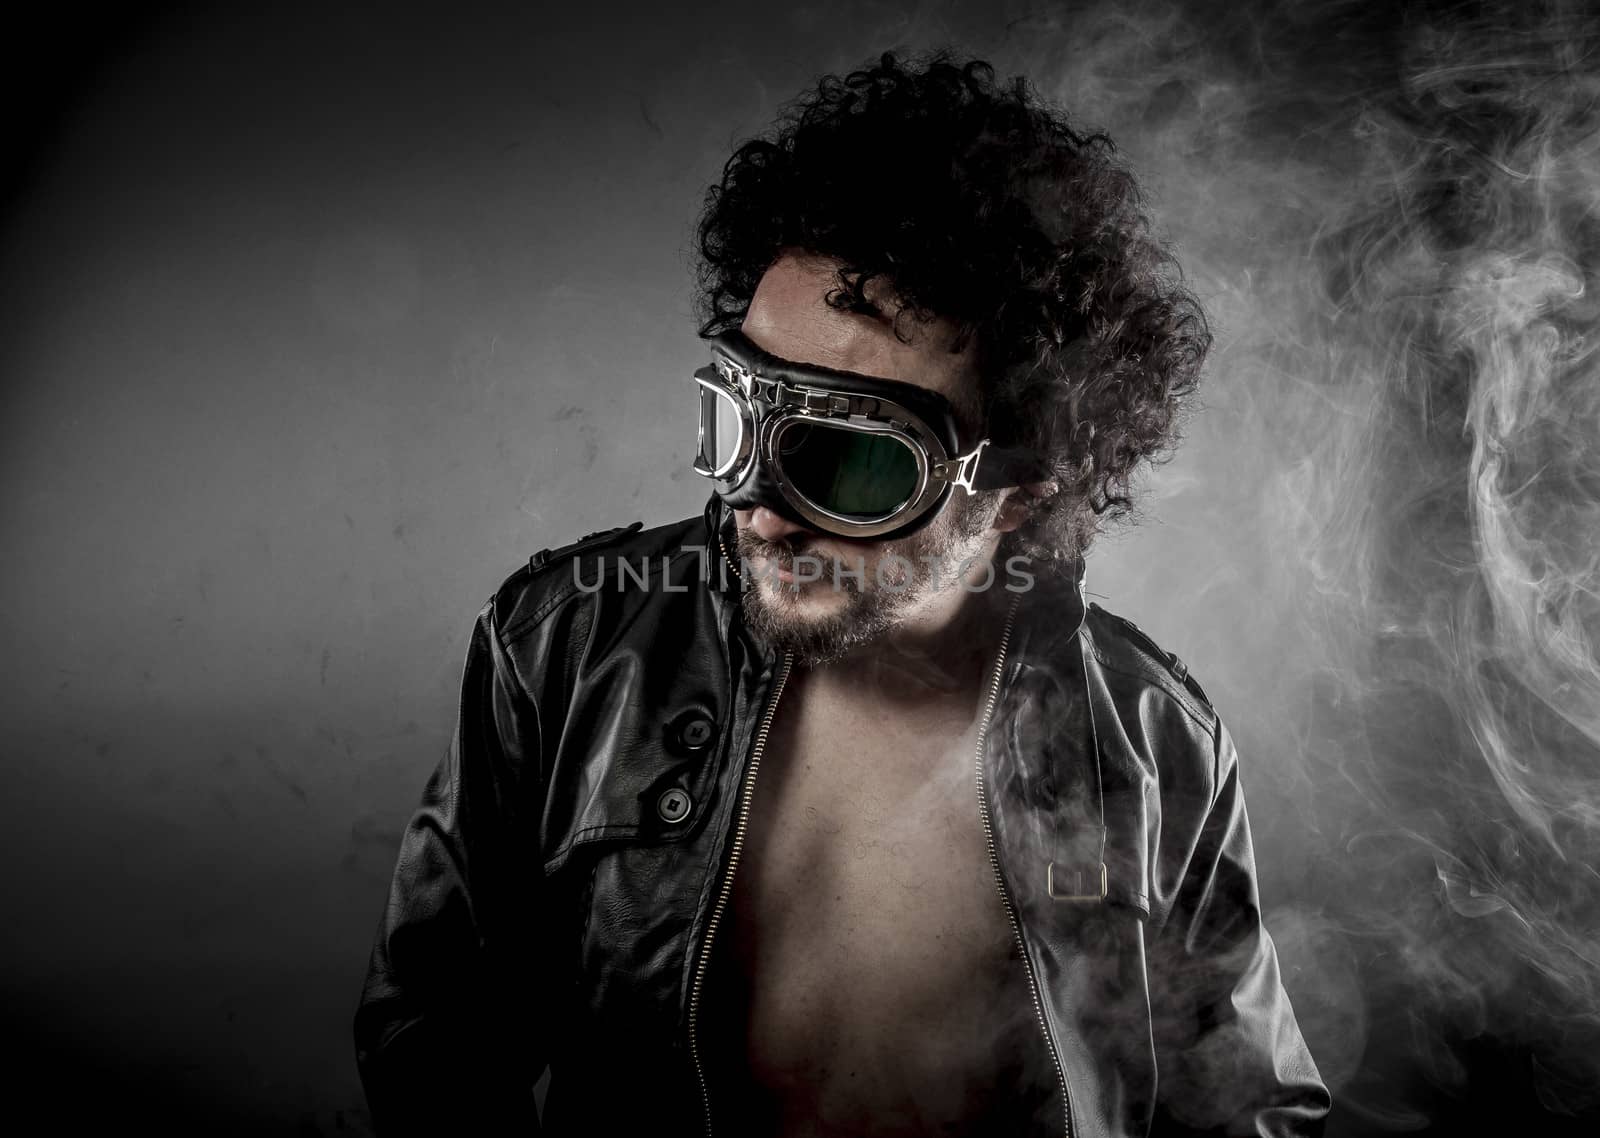 Sexy biker with sunglasses era dressed Leather jacket, huge smok by FernandoCortes